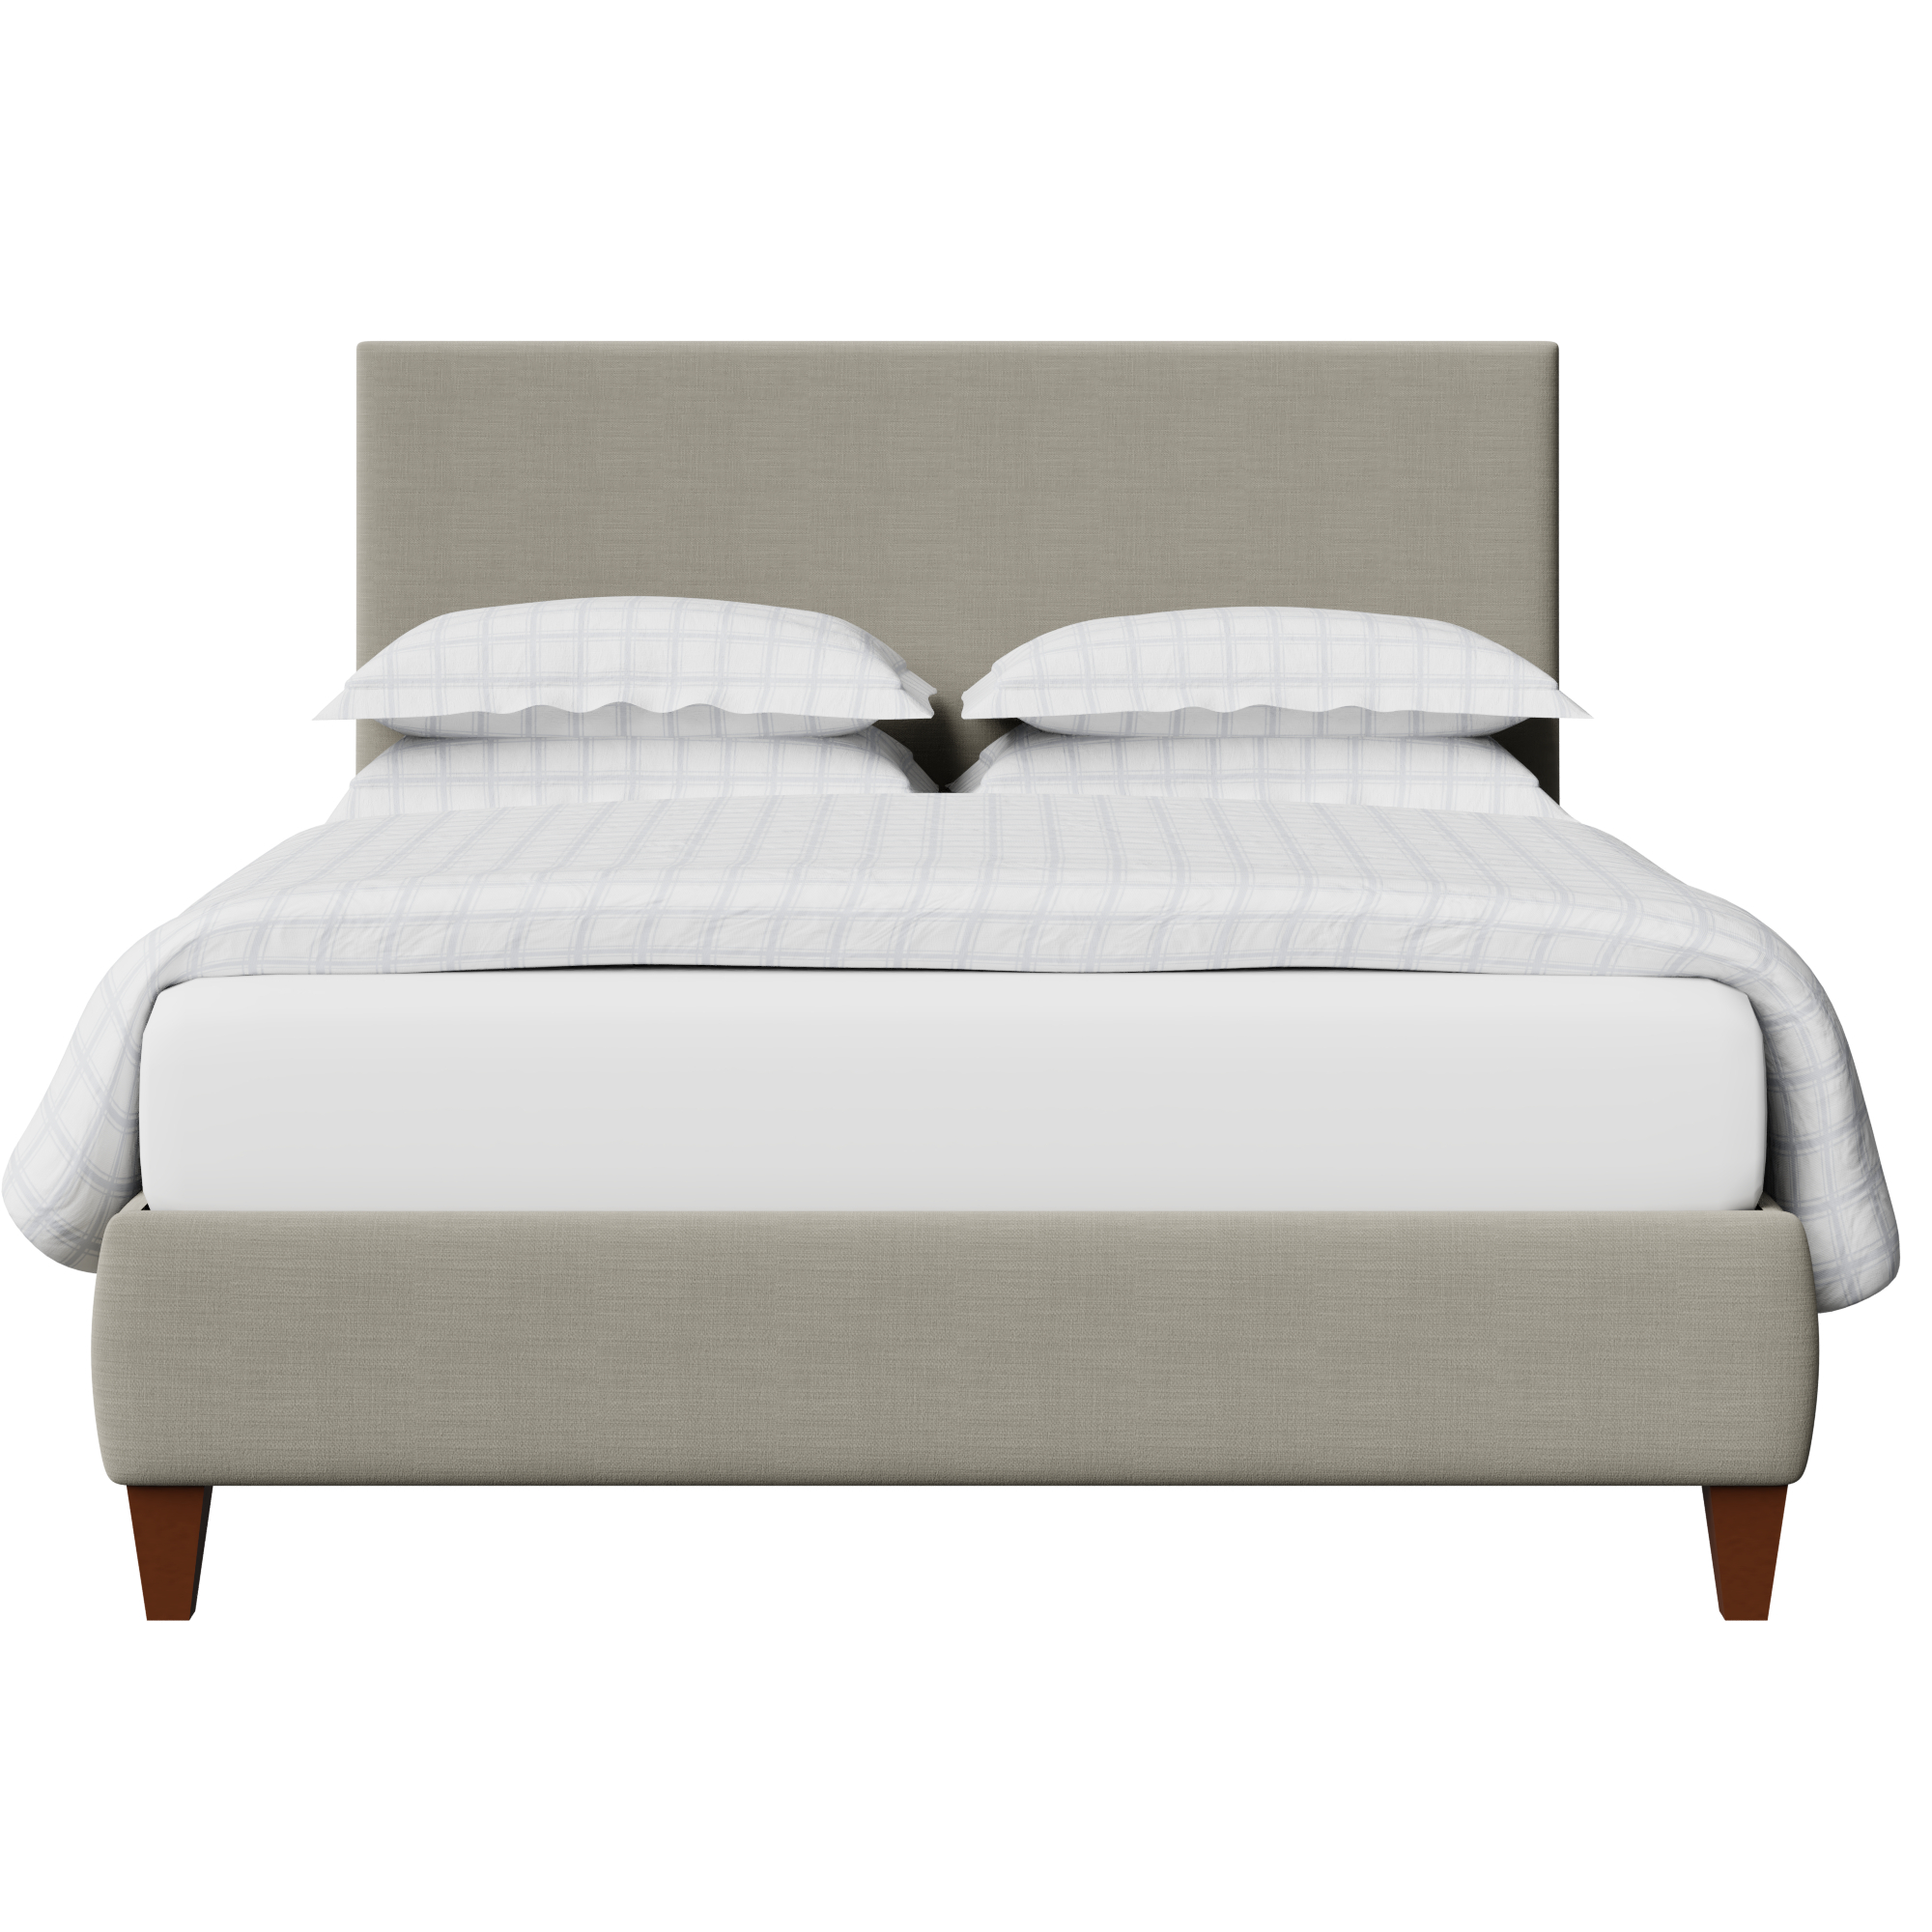 Yushan cama tapizada en tela gris